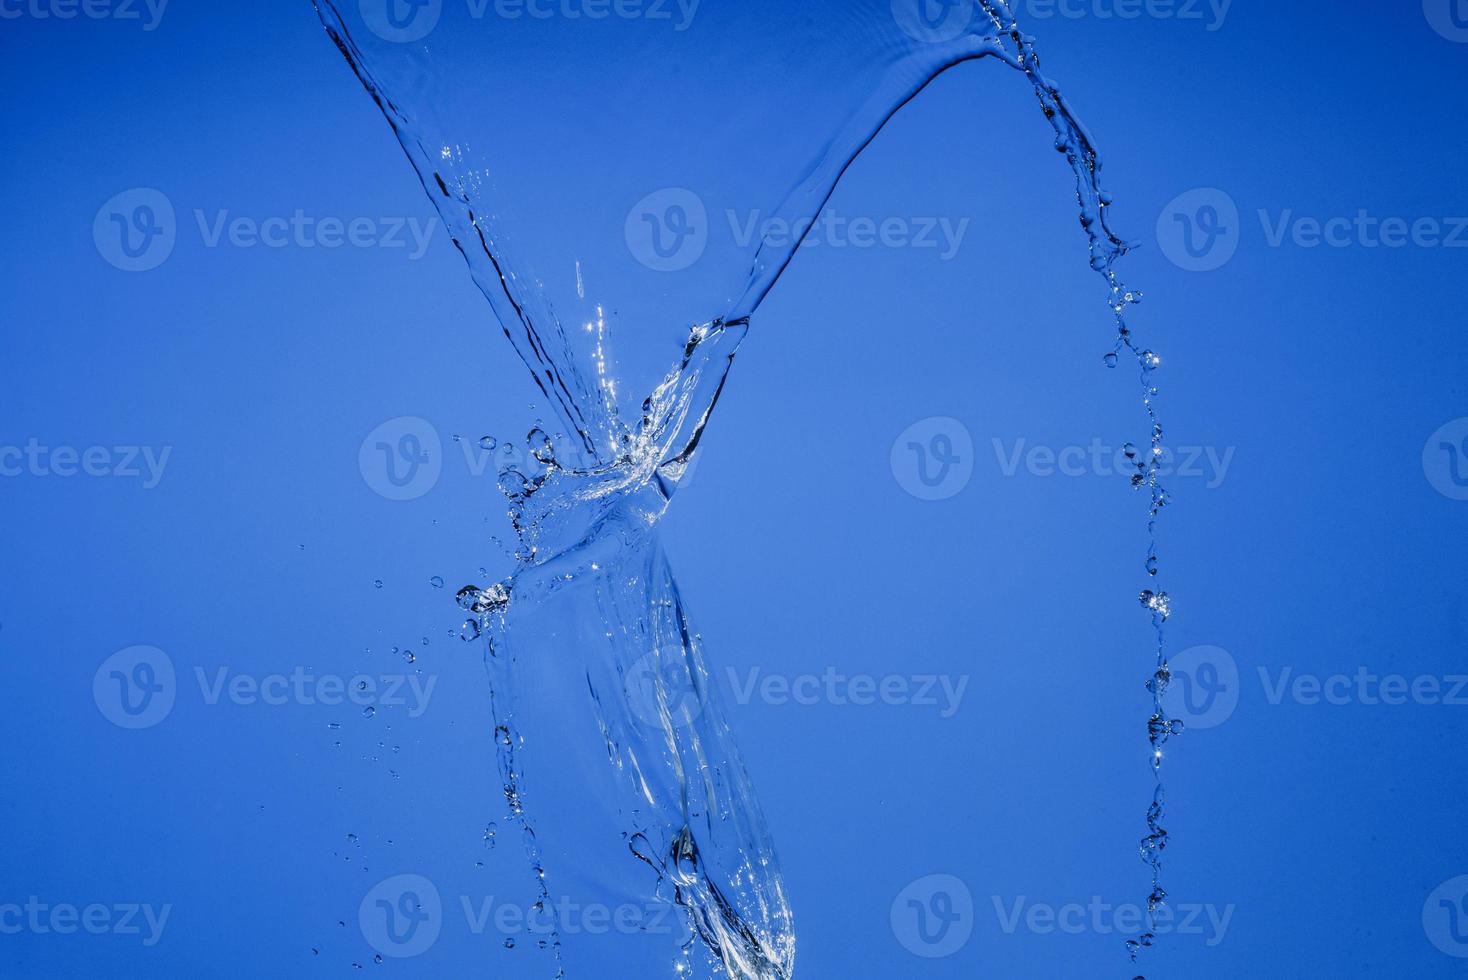 faller vatten på en blå bakgrund foto